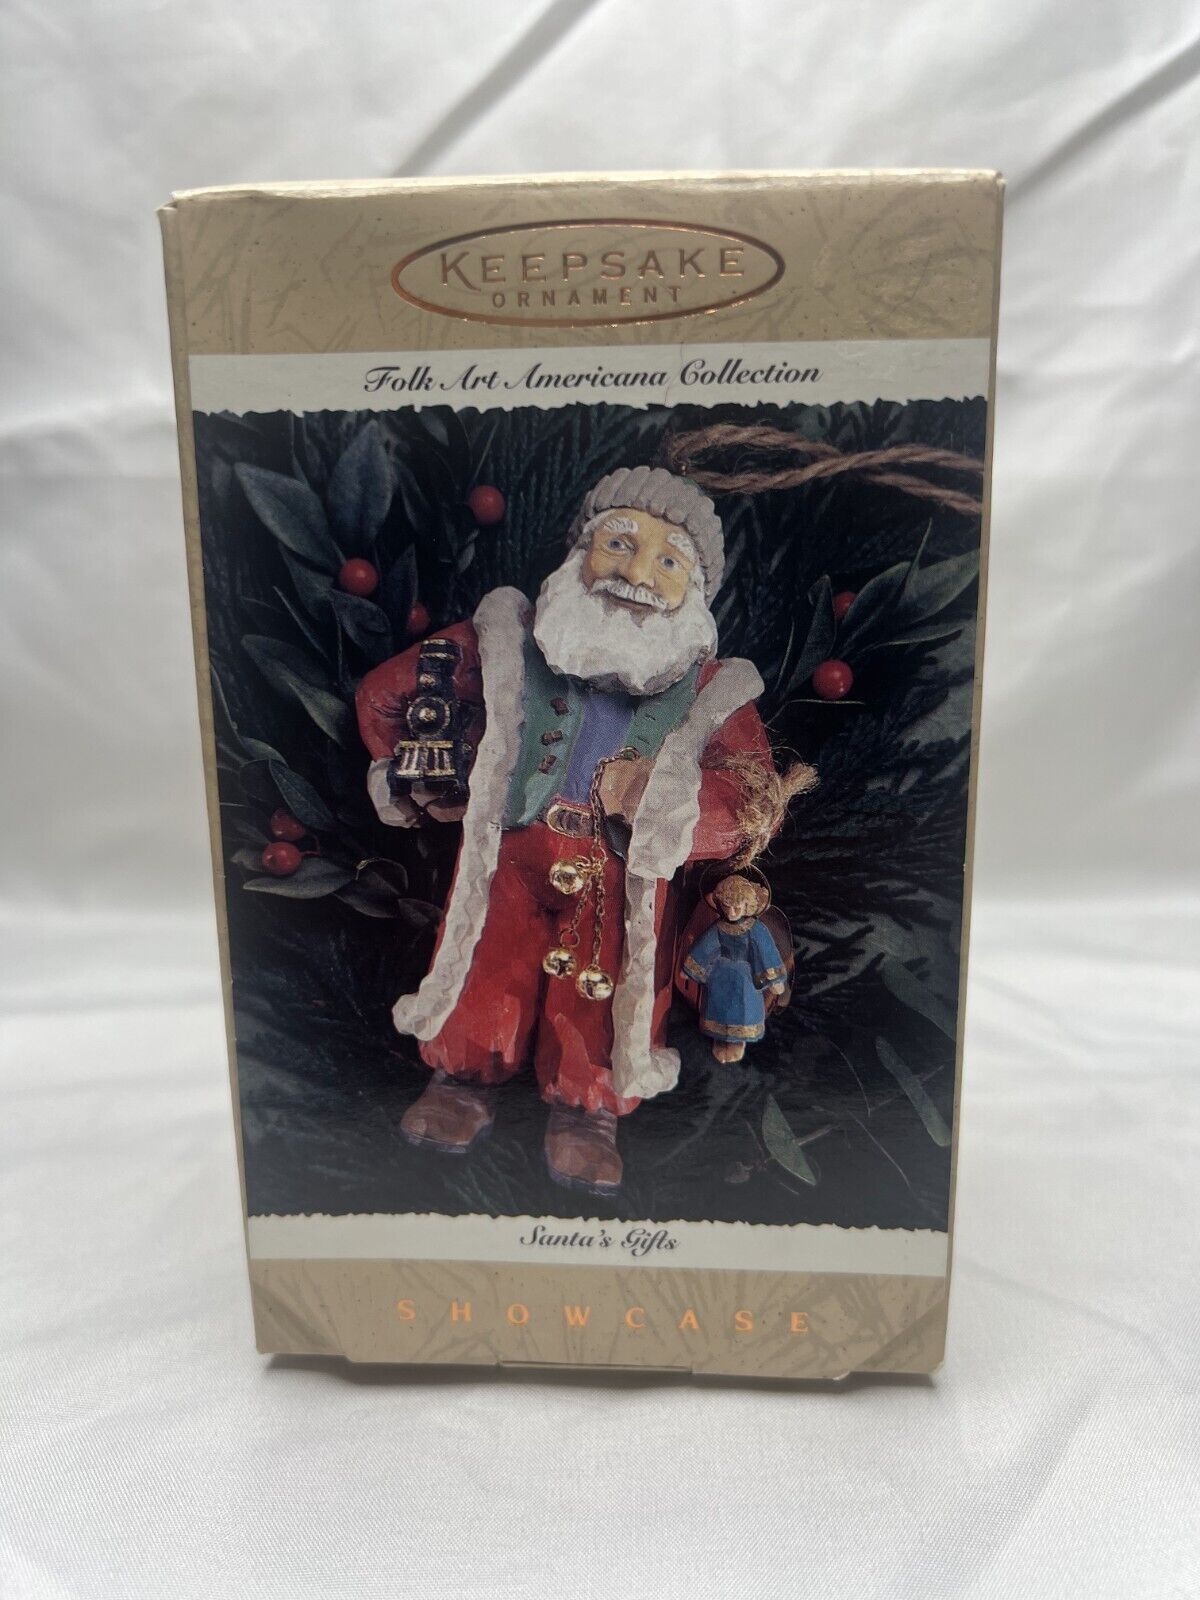 Hallmark 1996 Santa's Gifts Showcase Folk Art Americana Ornament FAST Shipping